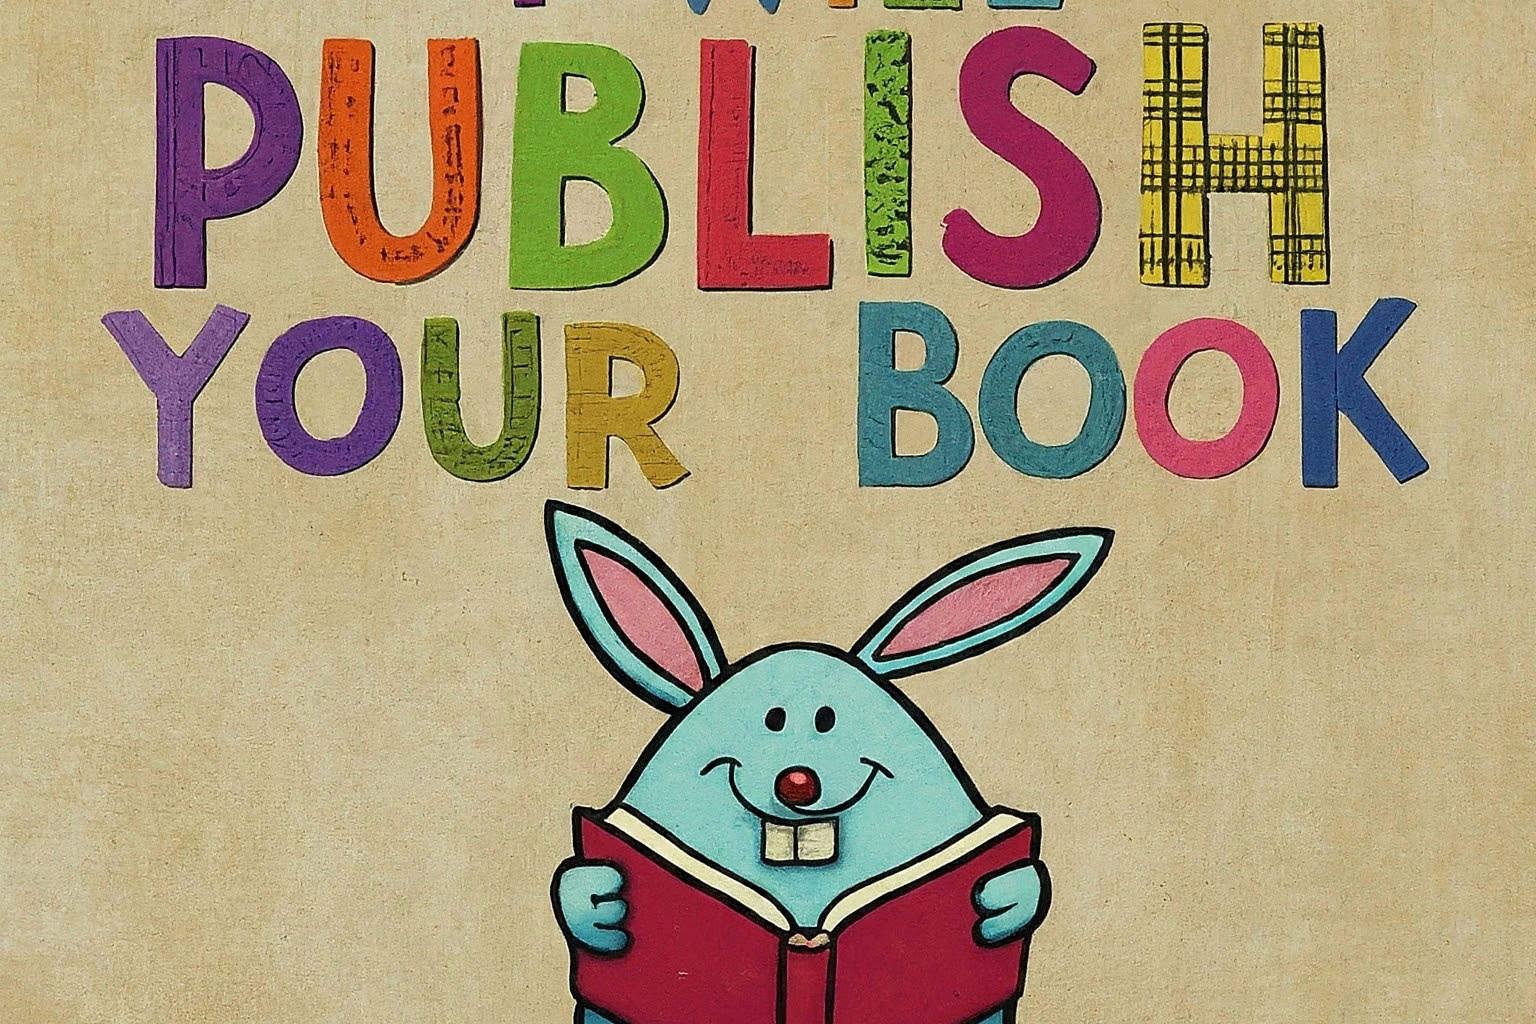 Publish your book illustration